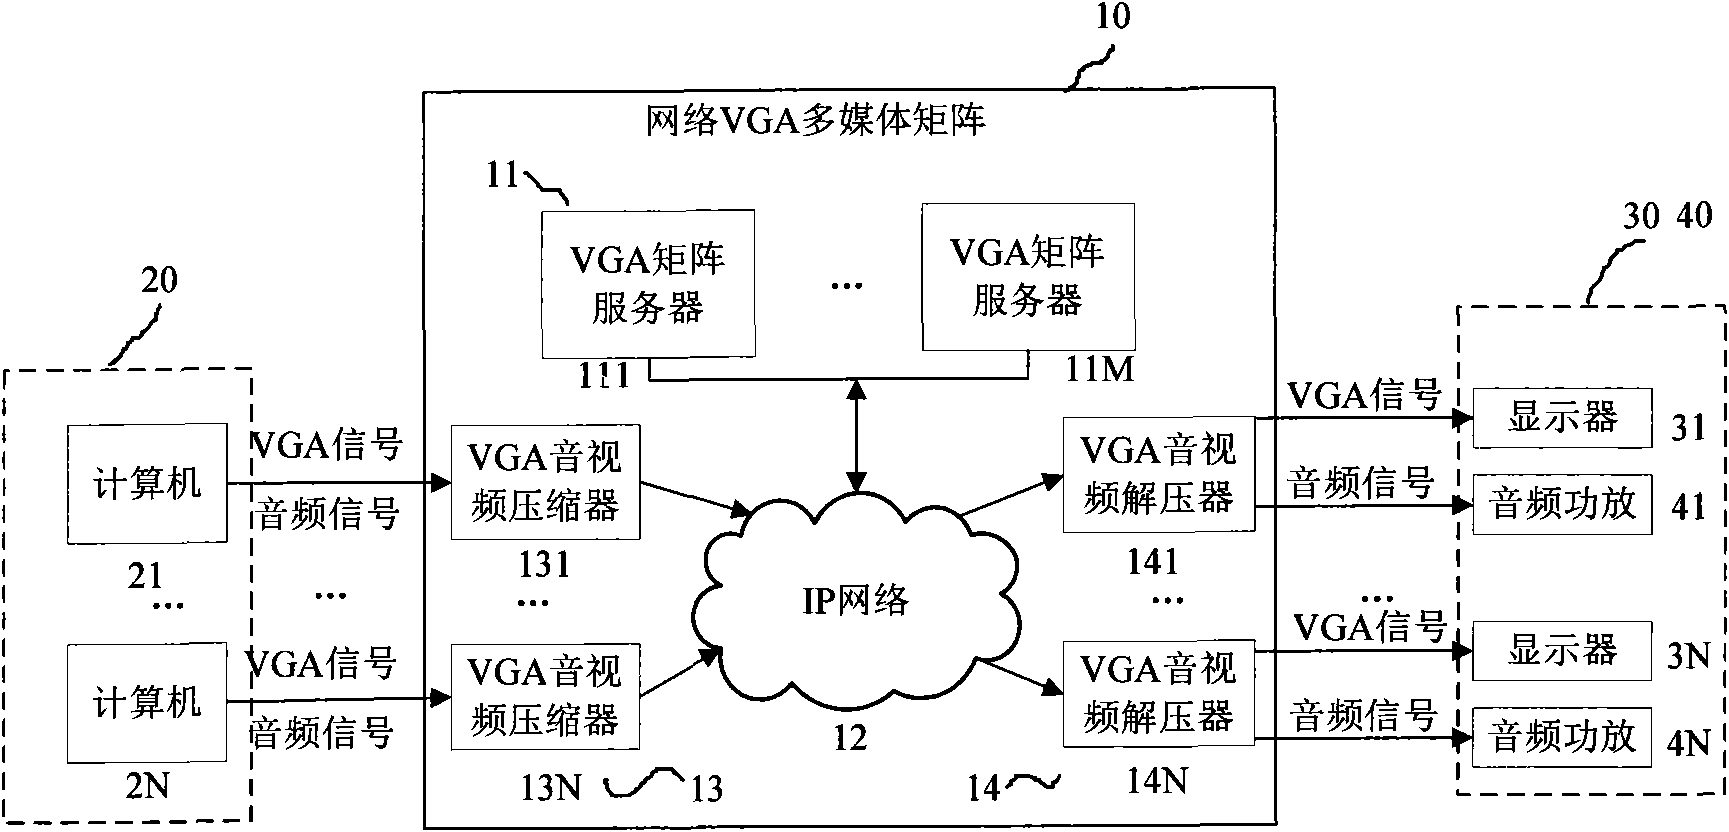 Distributed VGA multimedia digital matrix based on meshwork and work flow